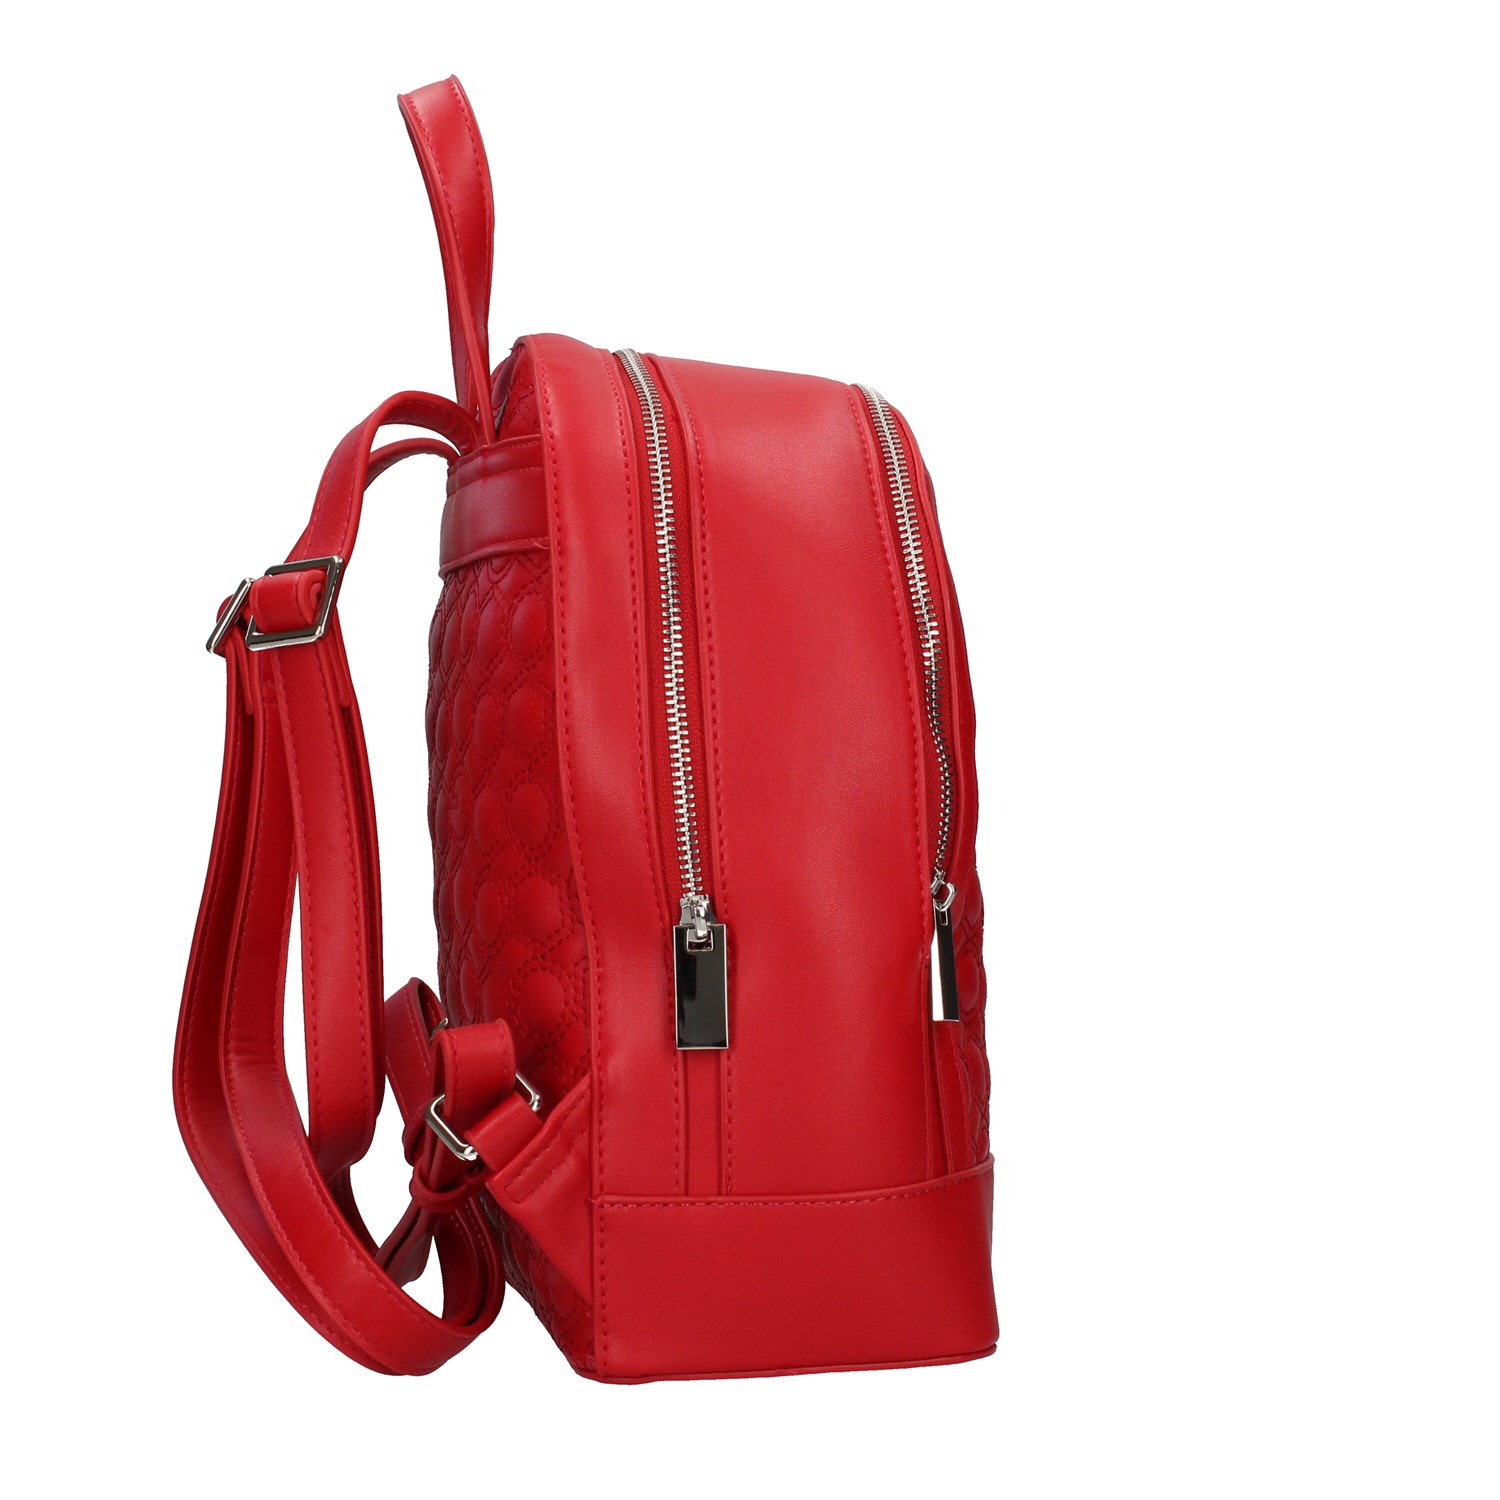 Gattinoni Roma Bags Accessories Backpacks RED BENTK7880WV